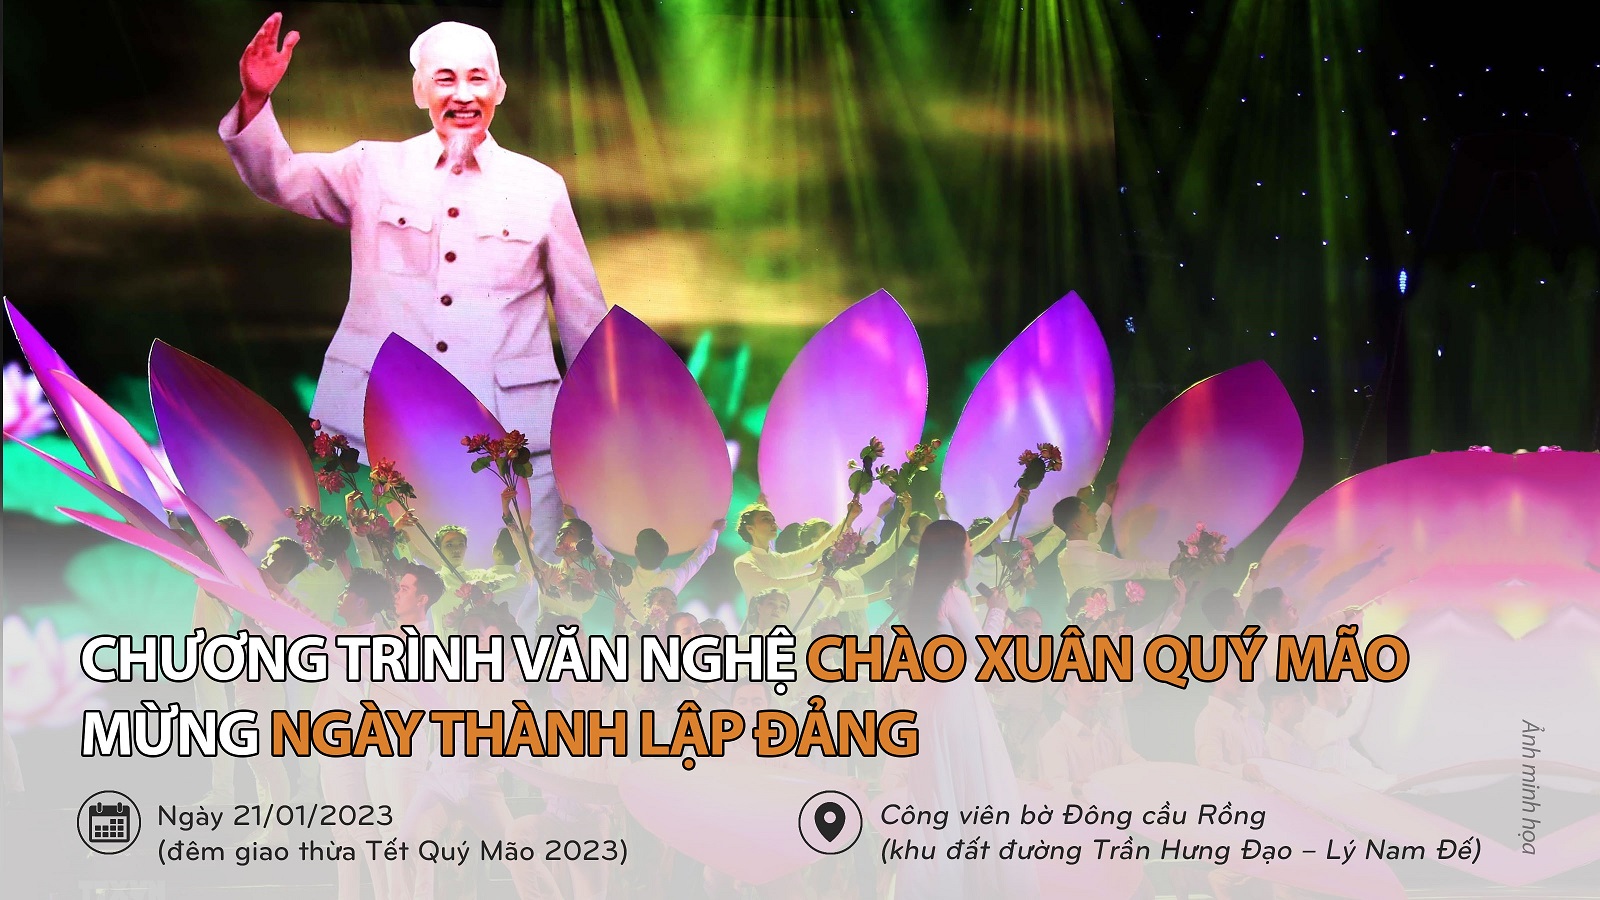 3 Chuong Trinh Van Nghe Chao Xuan Quy Mao 2023 Mung Ngay Thanh Lap Dang Danang